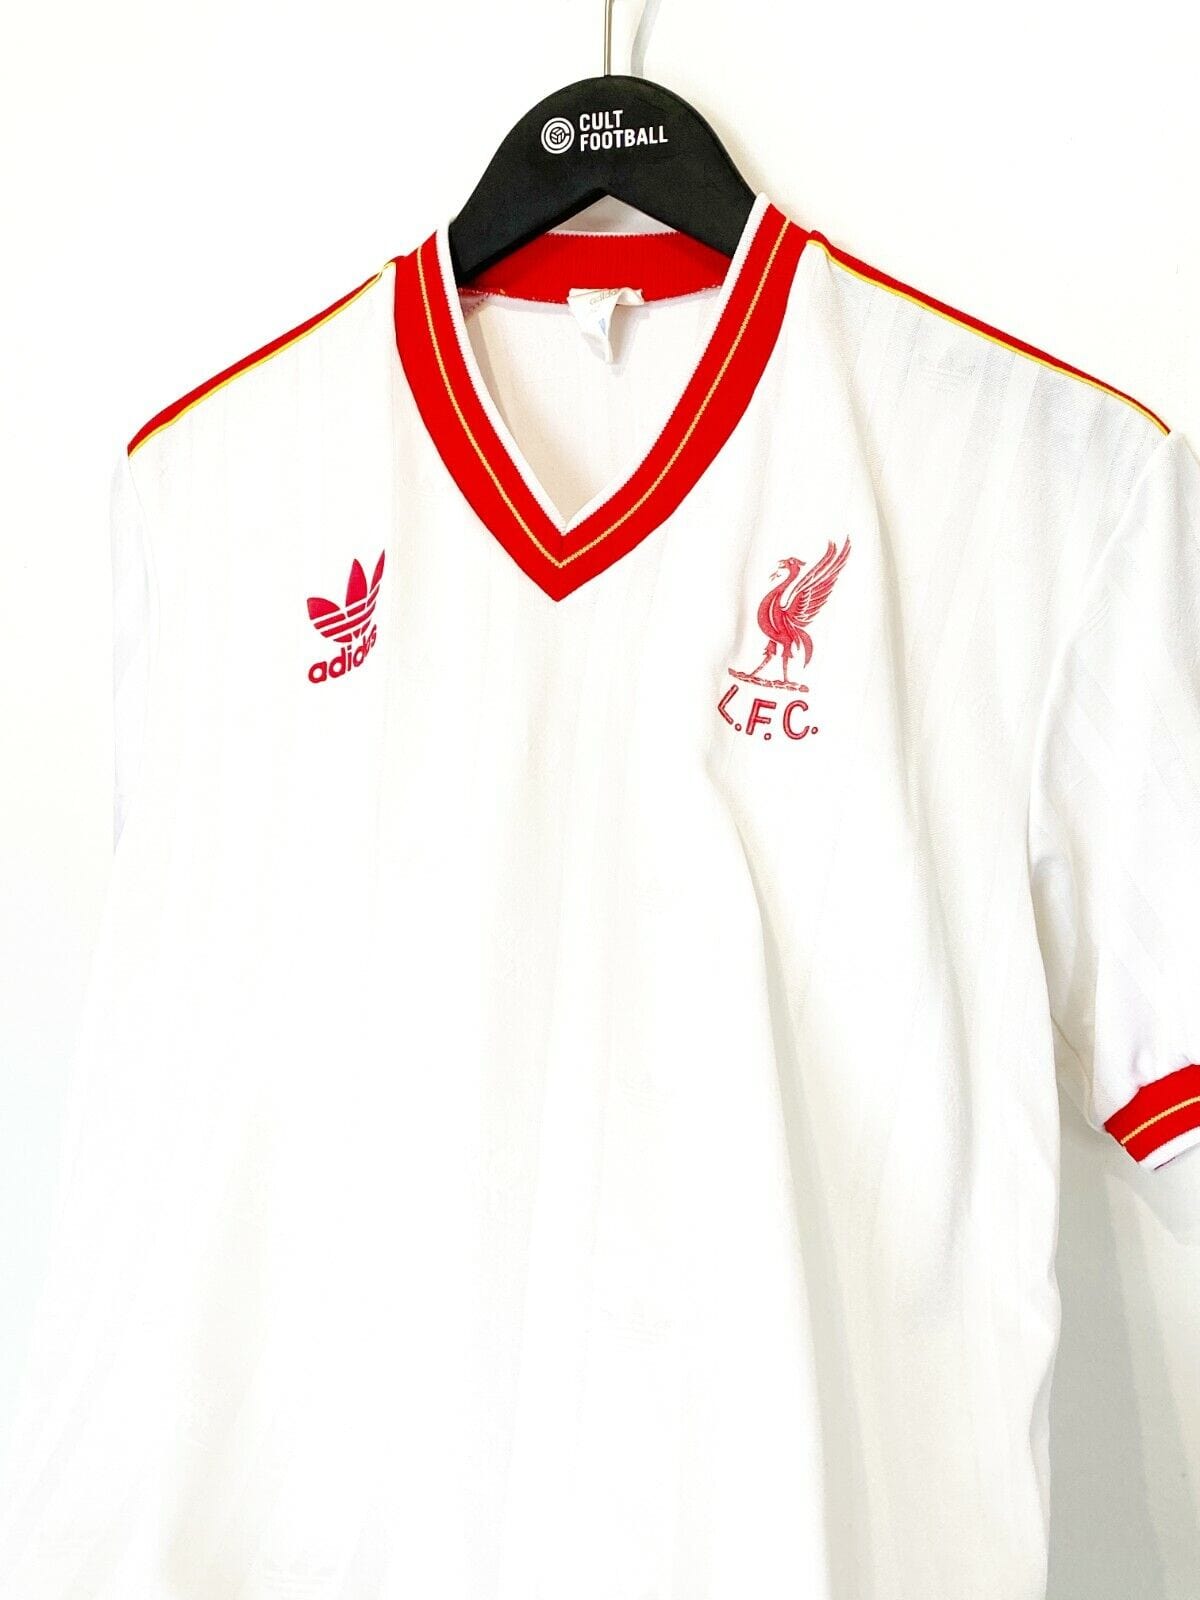 Retro Liverpool Shirts & Classic Football Kits for Sale